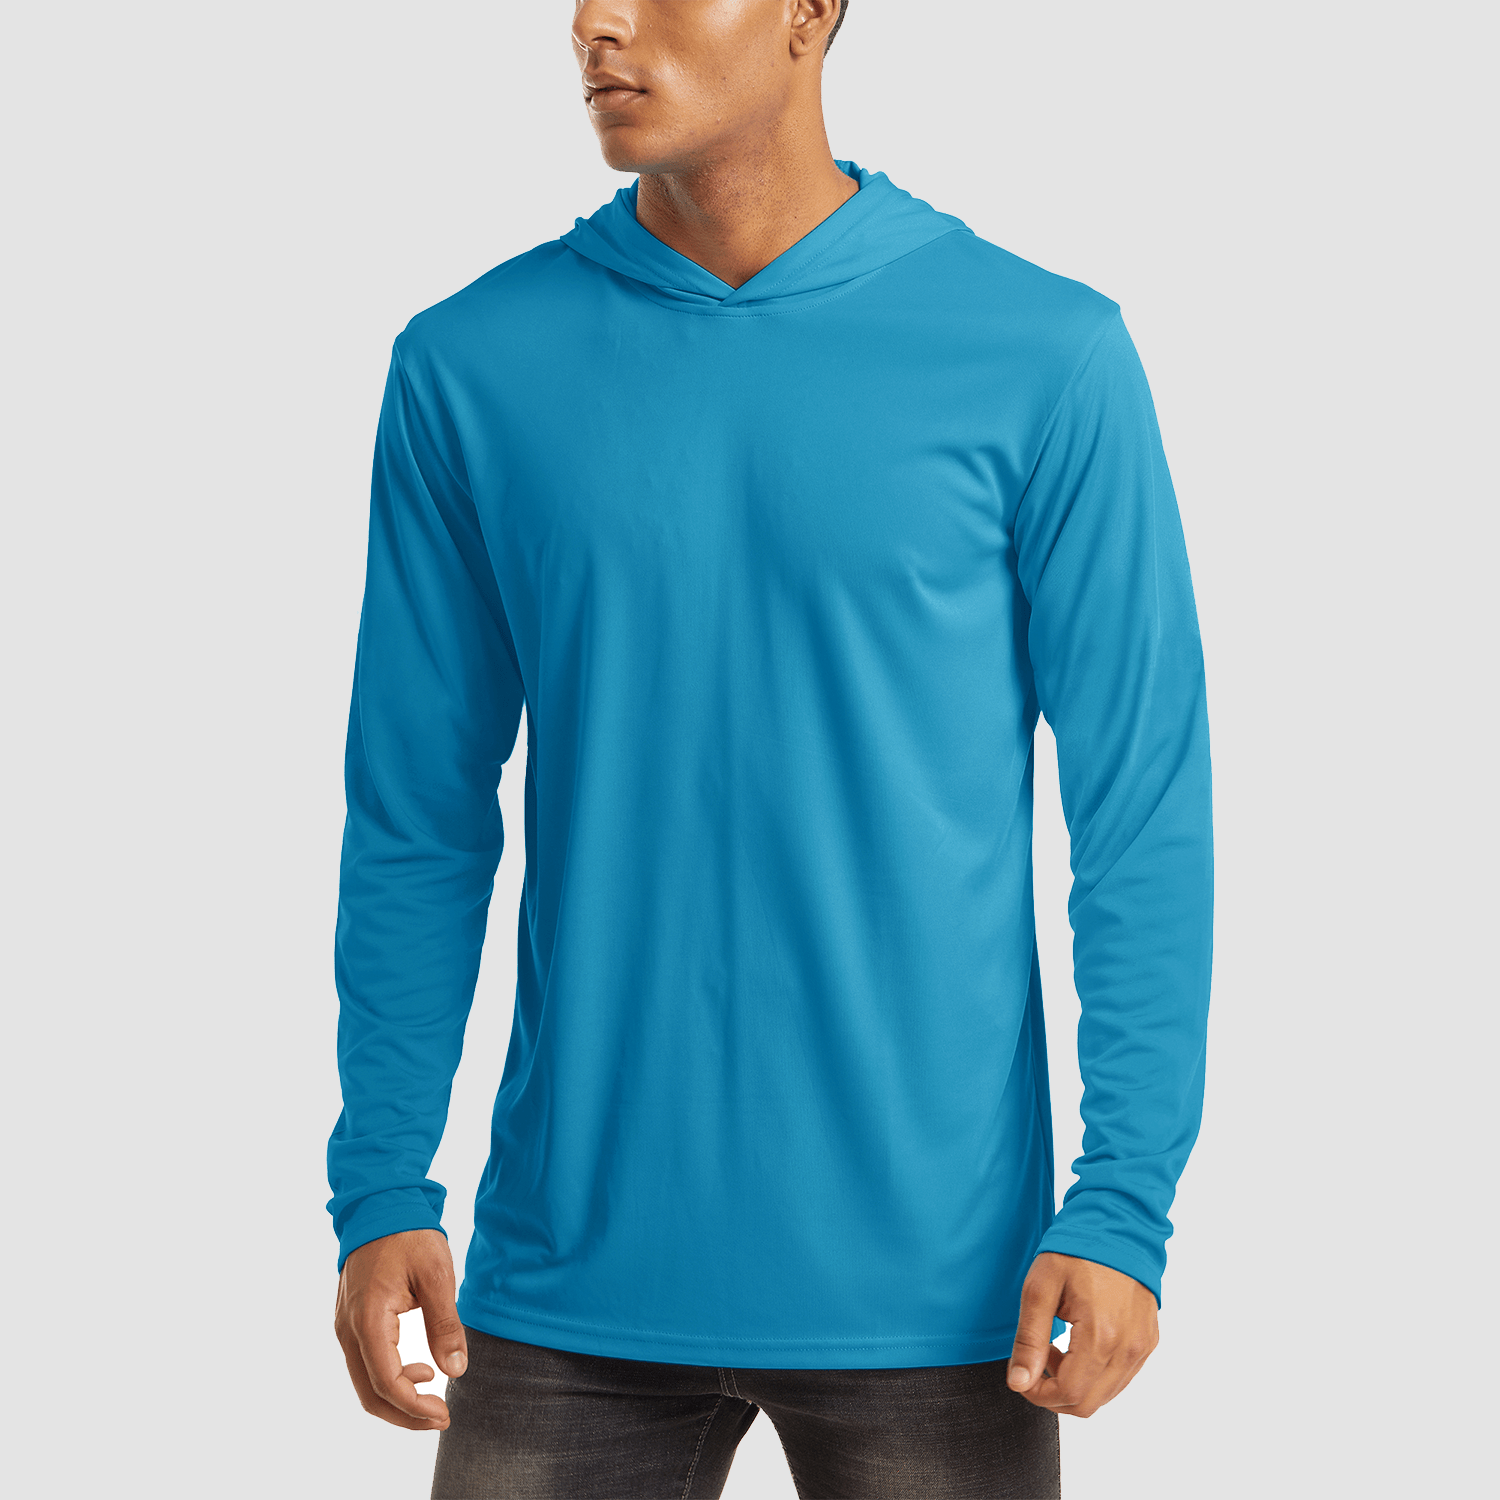 【Buy 4 Get 4th Free】Men's Long Sleeve Hooded Shirt UPF 50+ Athletic Shirts, Grey / M